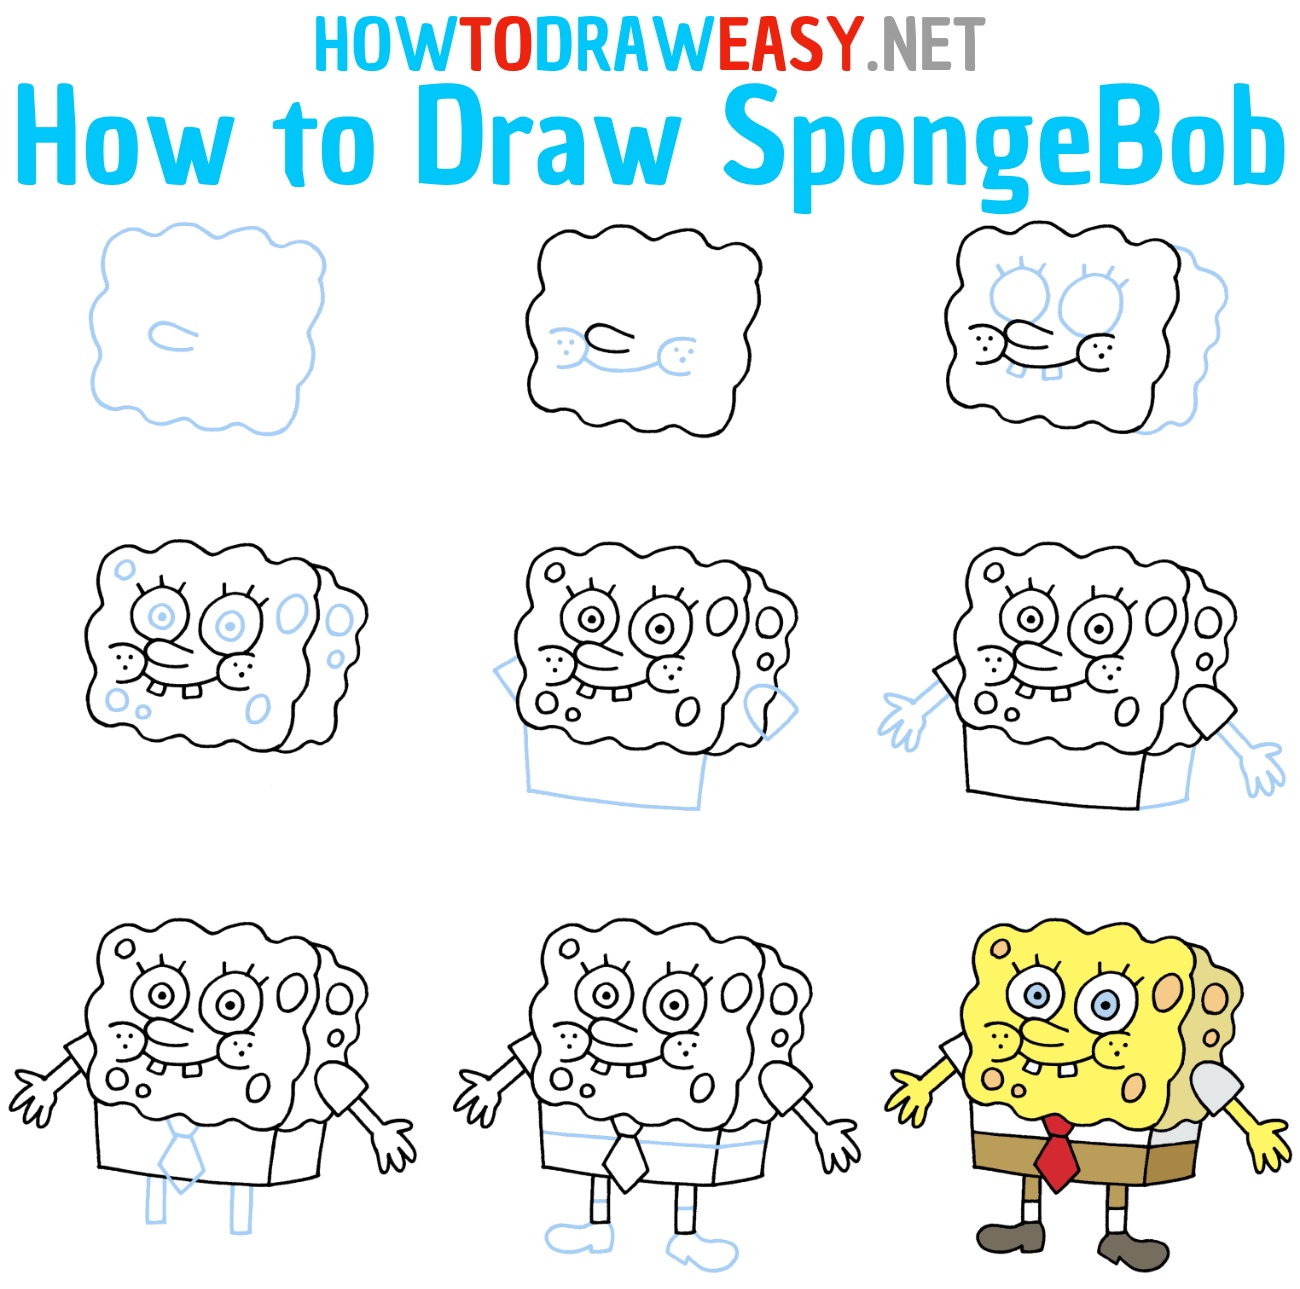 How to Draw SpongeBob SquarePants Draw for Kids